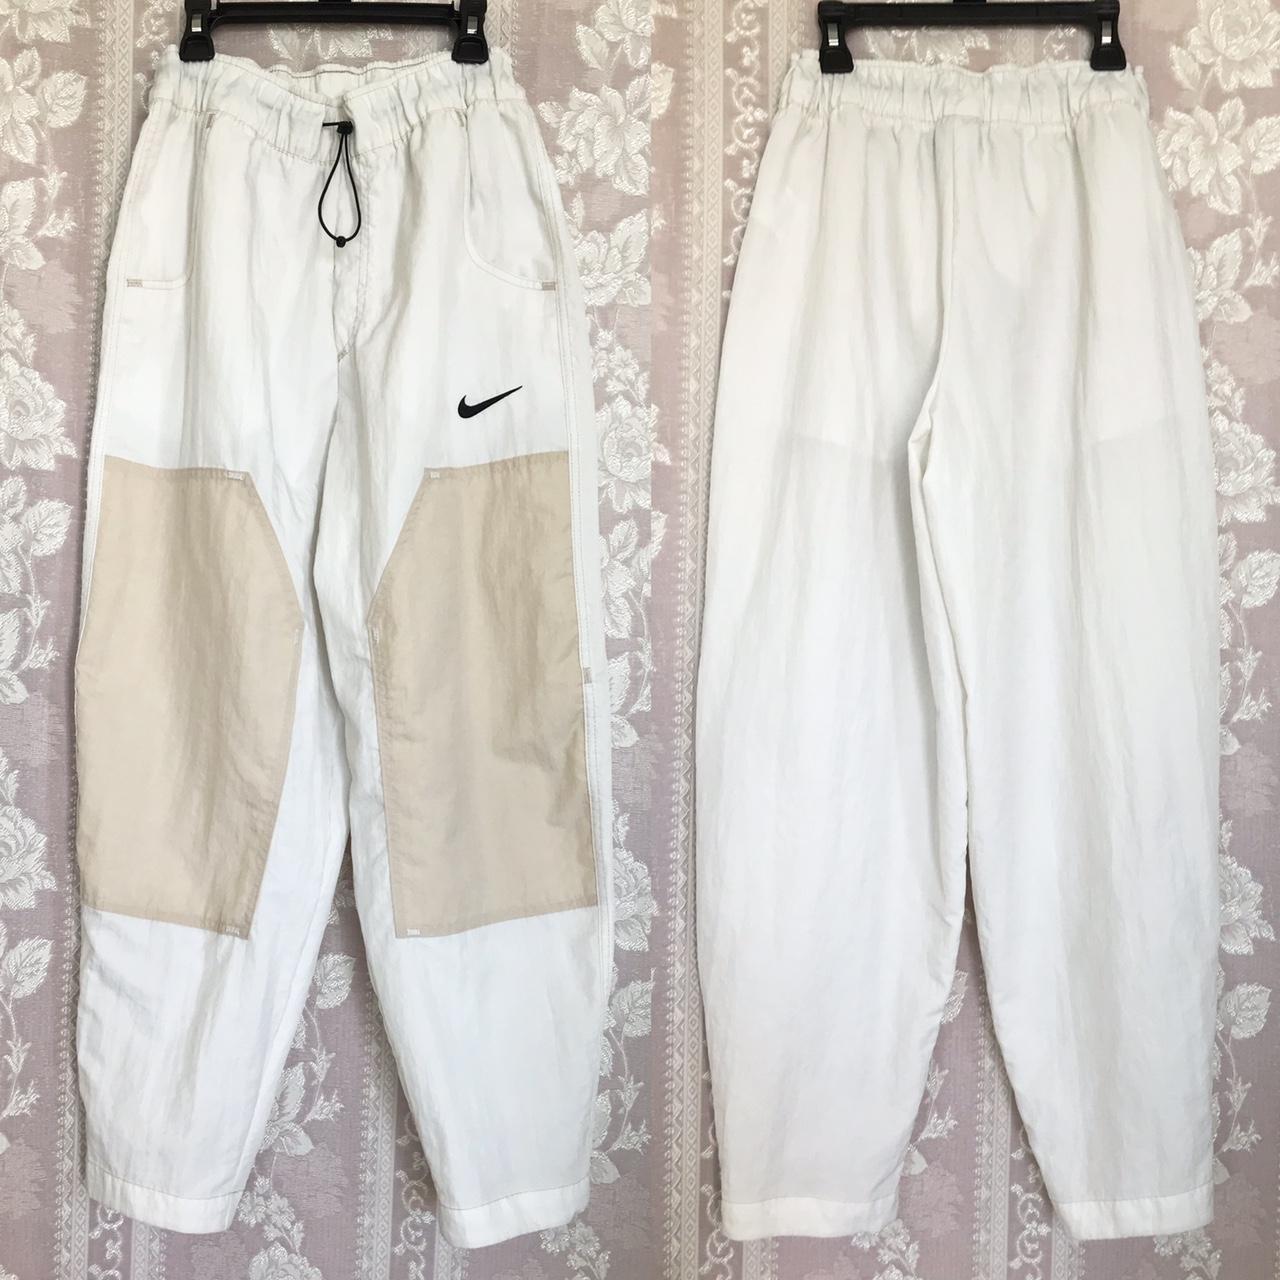 Nike White Track Pants ($48 shipped), FREE SHIPPING